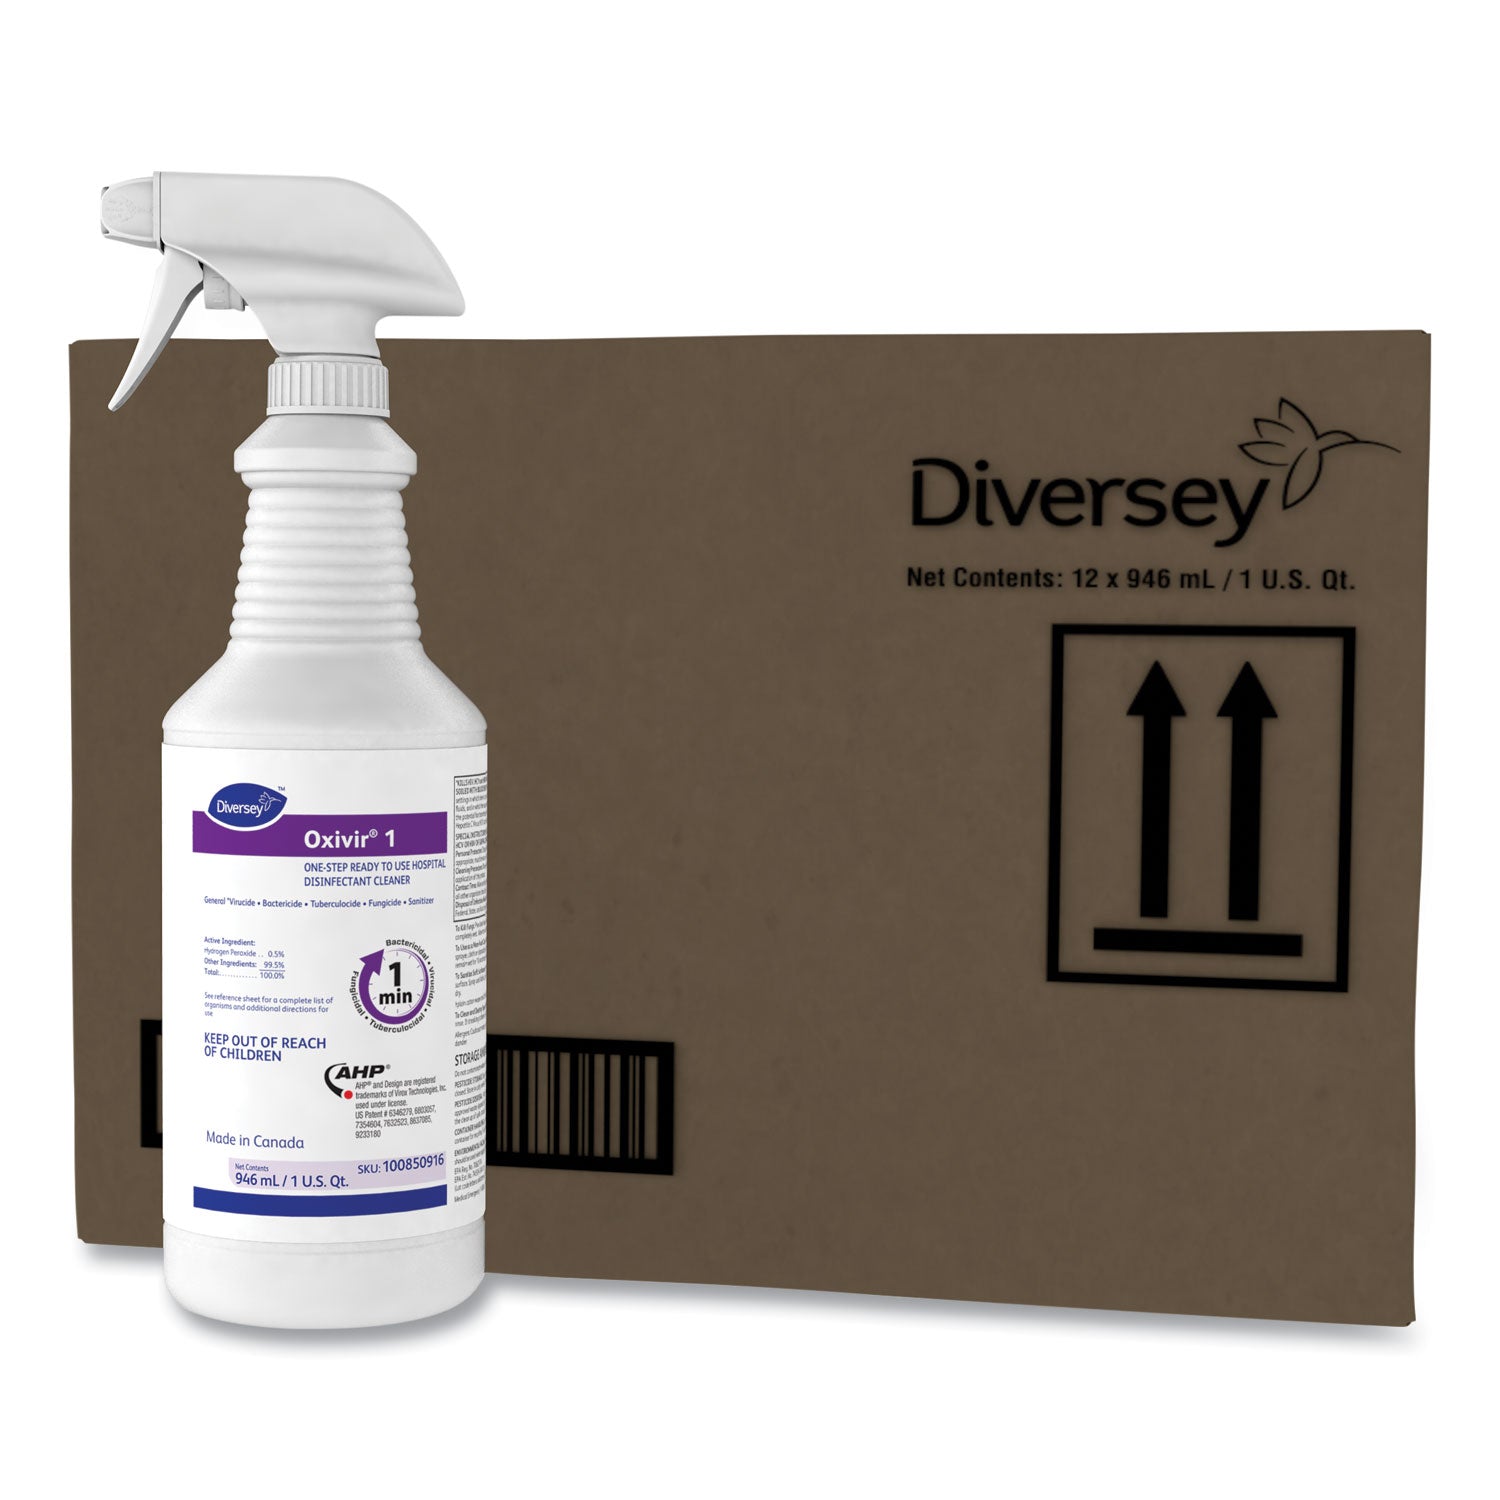 oxivir-1-rtu-disinfectant-cleaner-32-oz-spray-bottle-12-carton_dvo100850916 - 1